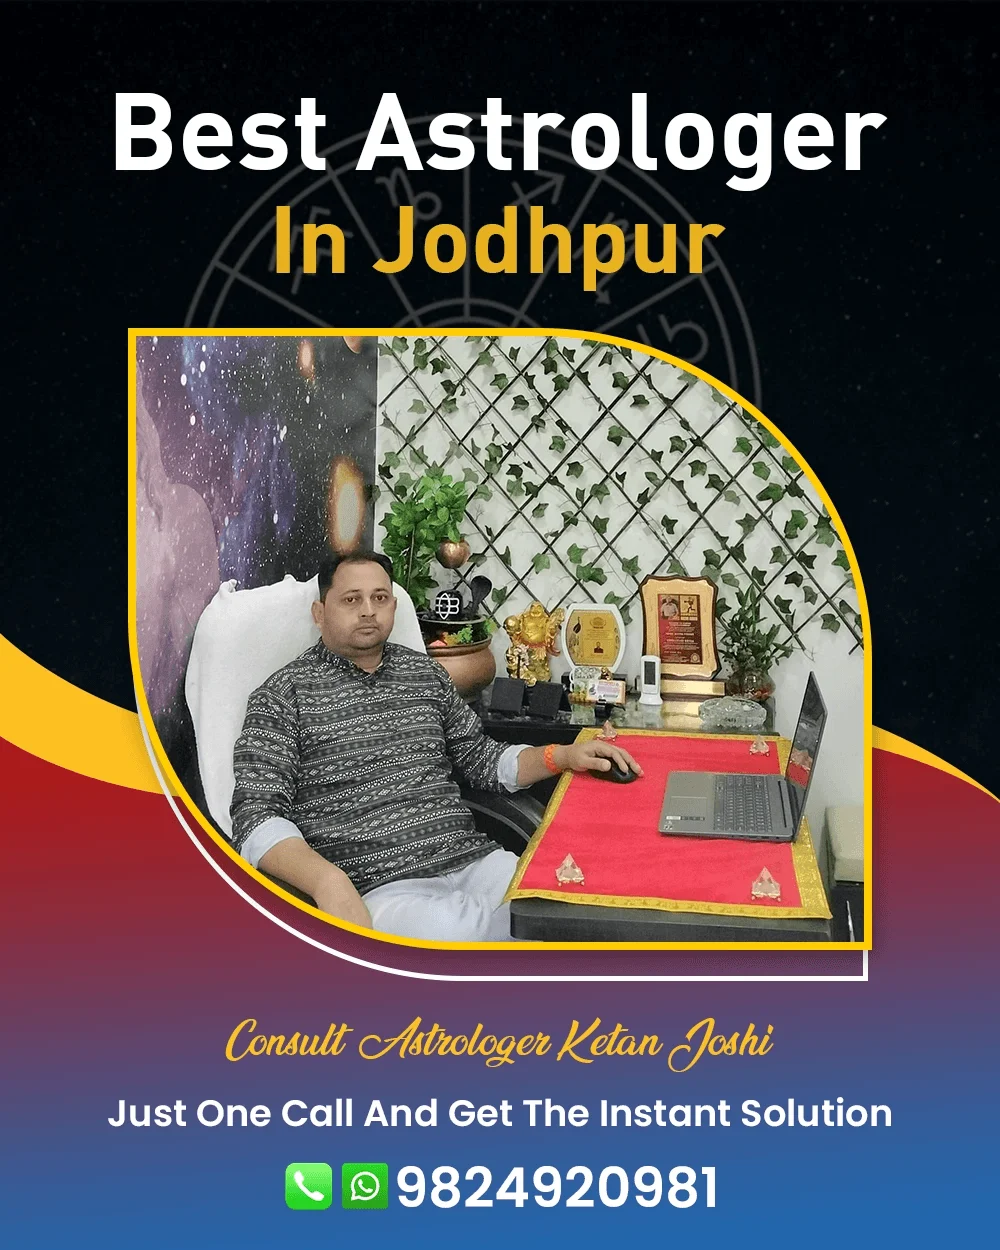 Best Astrologer In Jodhpur